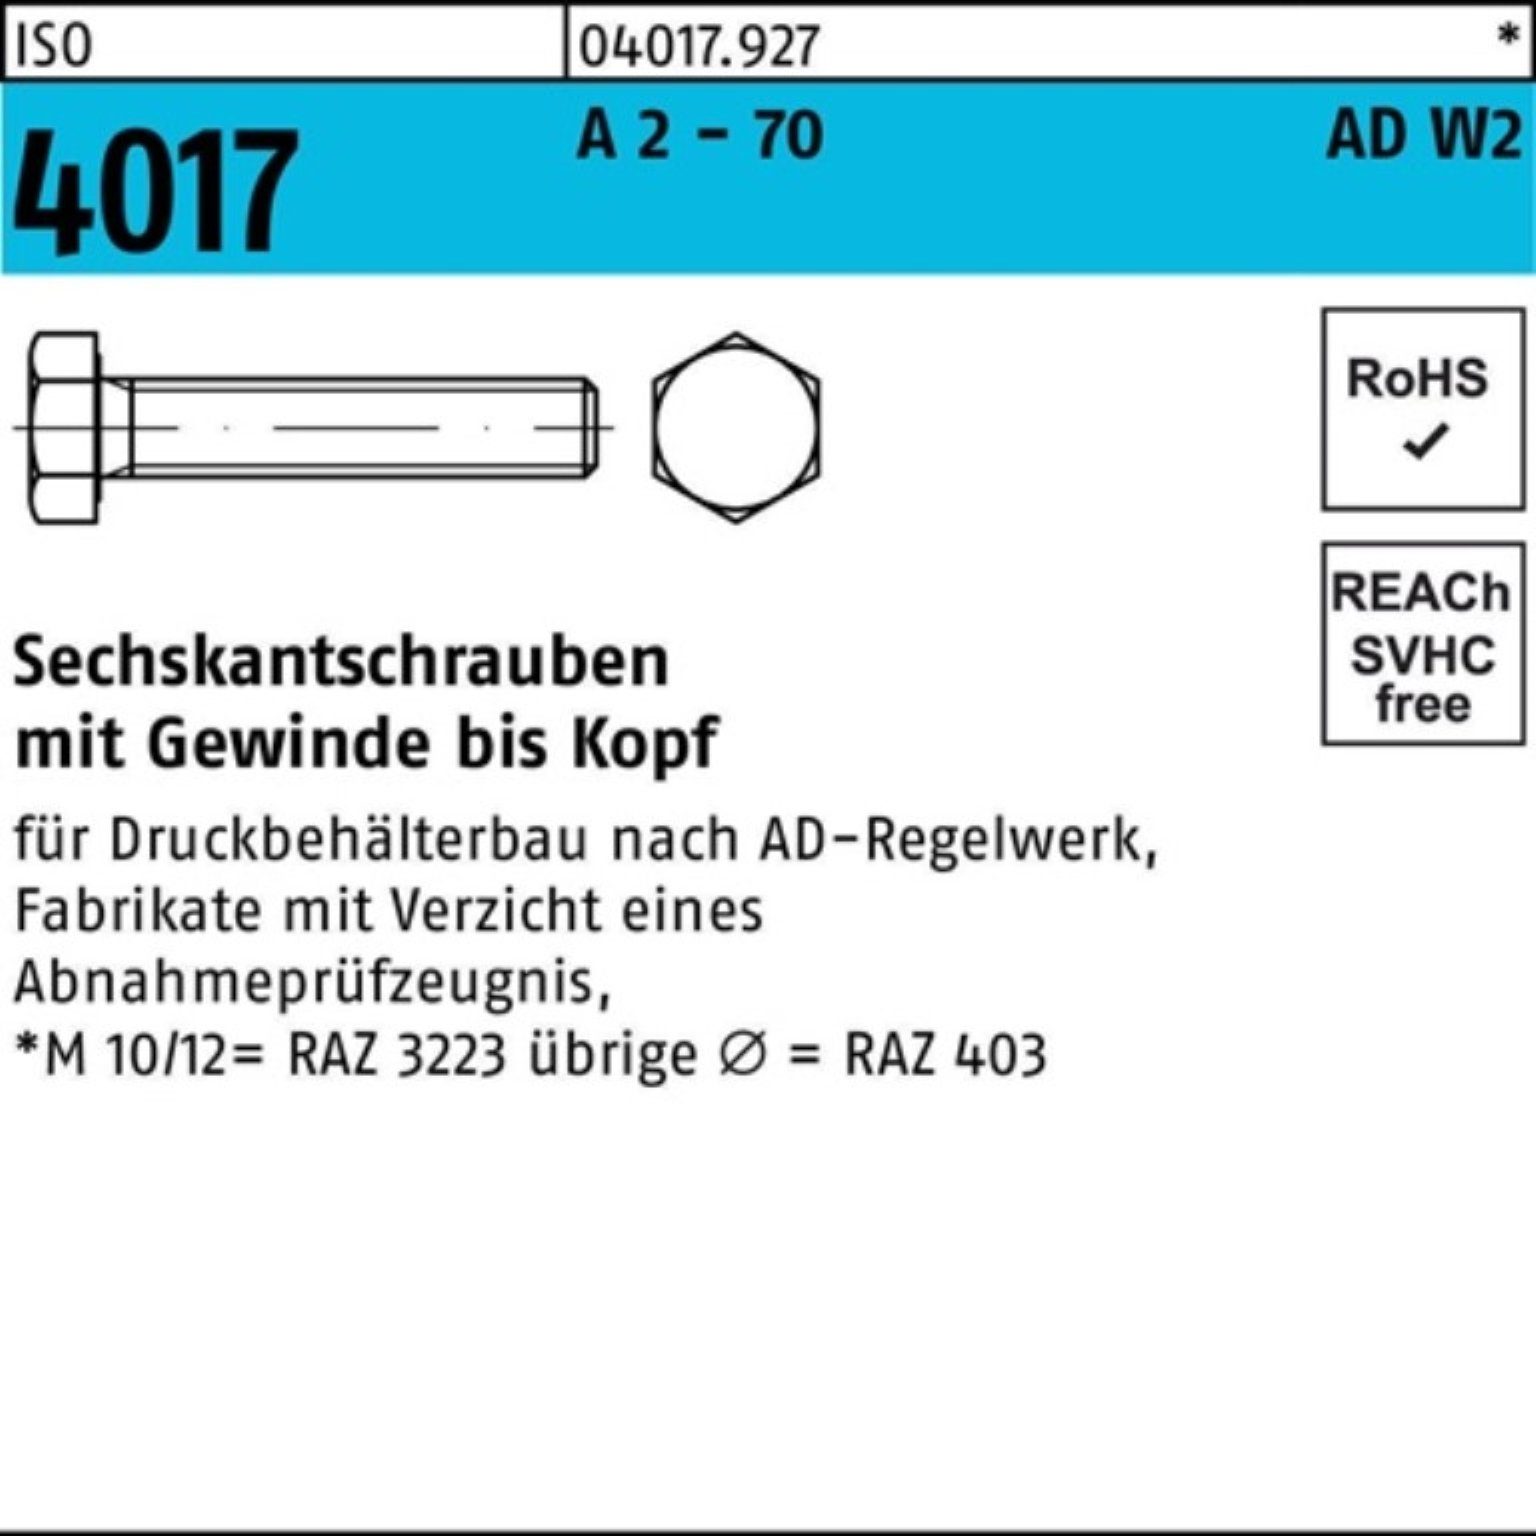 Bufab Sechskantschraube 100er Pack Sechskantschraube ISO 4017 VG M20x 60 A 2 - 70 AD-W2 25 St